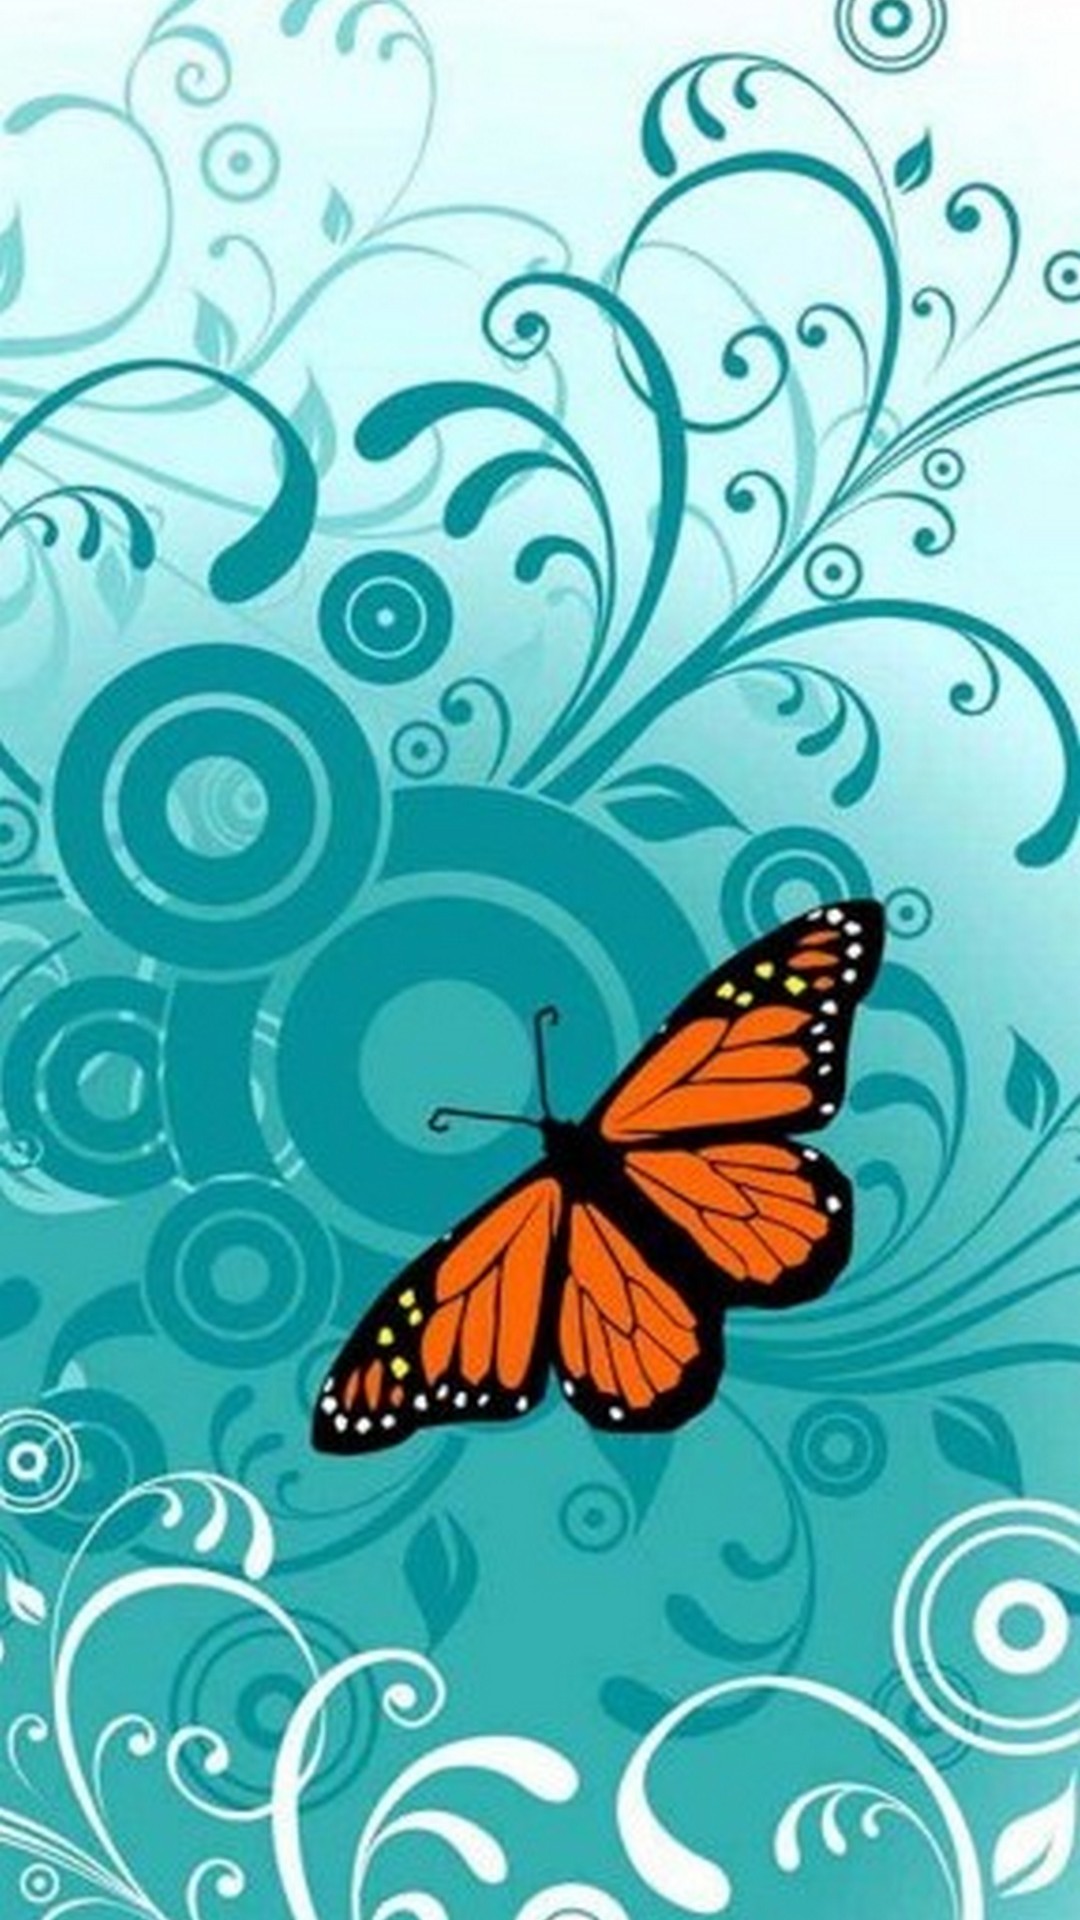 iPhone 7 Wallpaper Cute Butterfly resolution 1080x1920